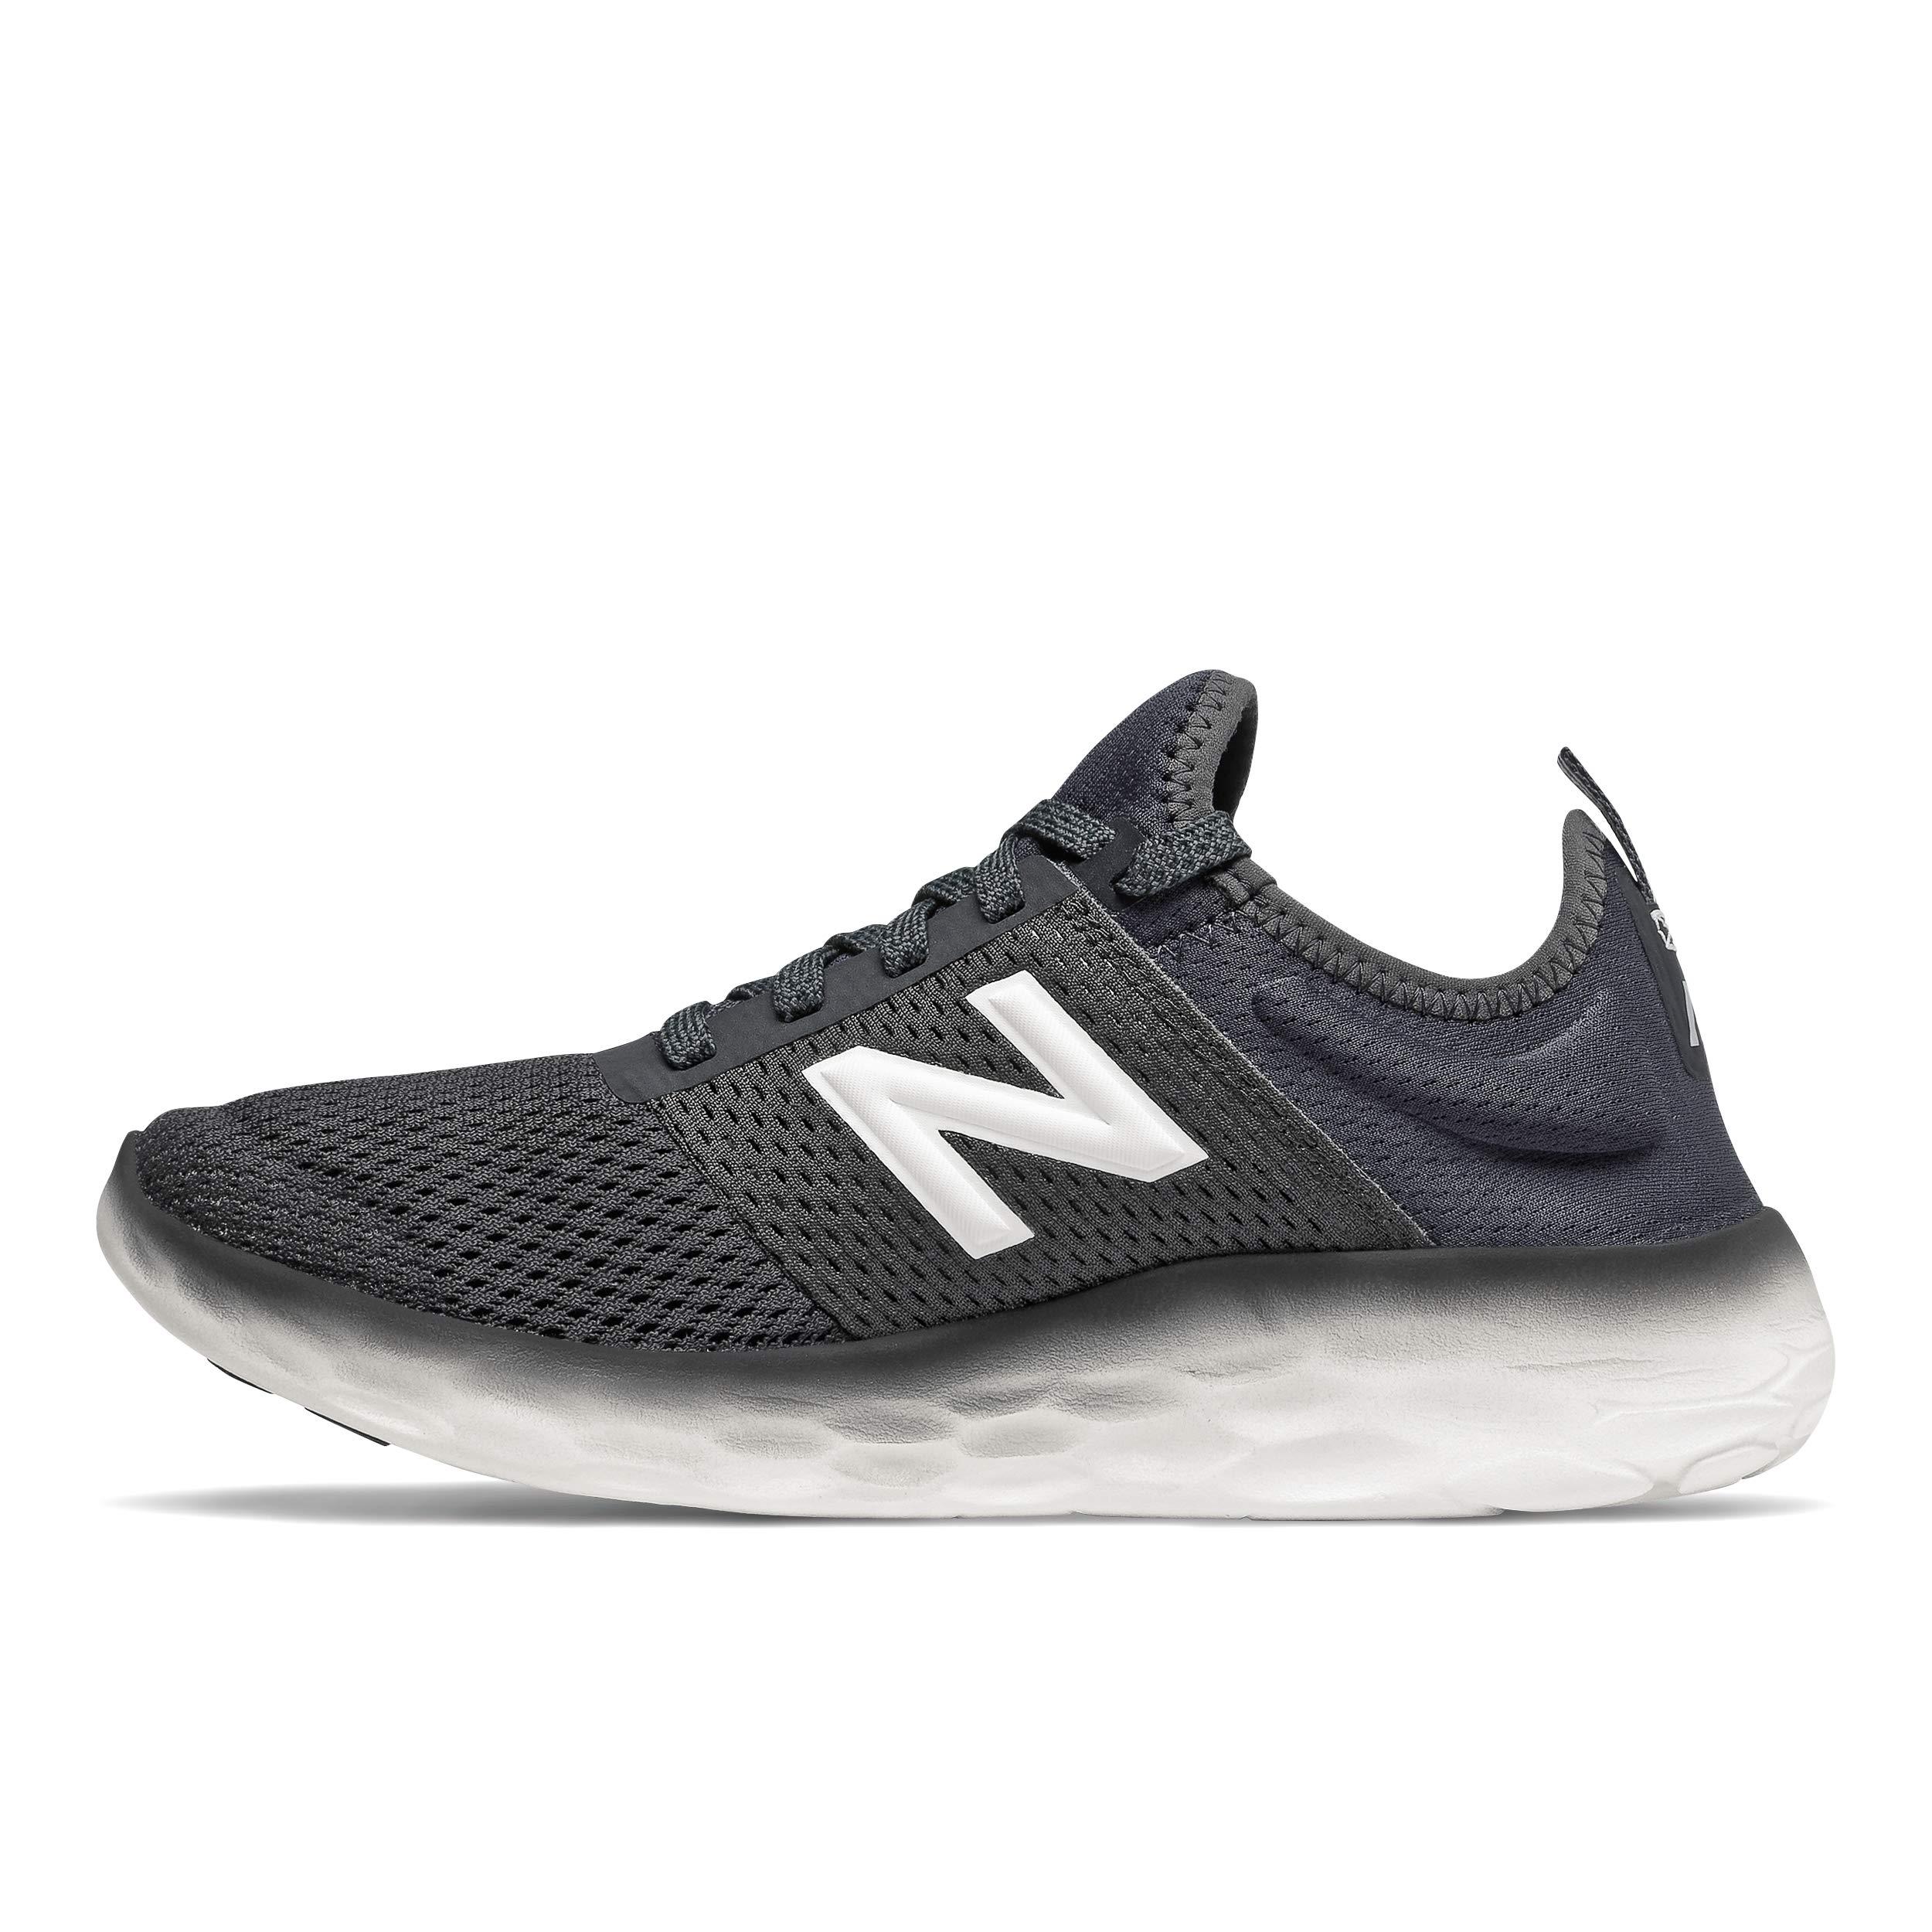 New Balance Rubber Fresh Foam Sport V2 Running Shoe in Black - Lyst